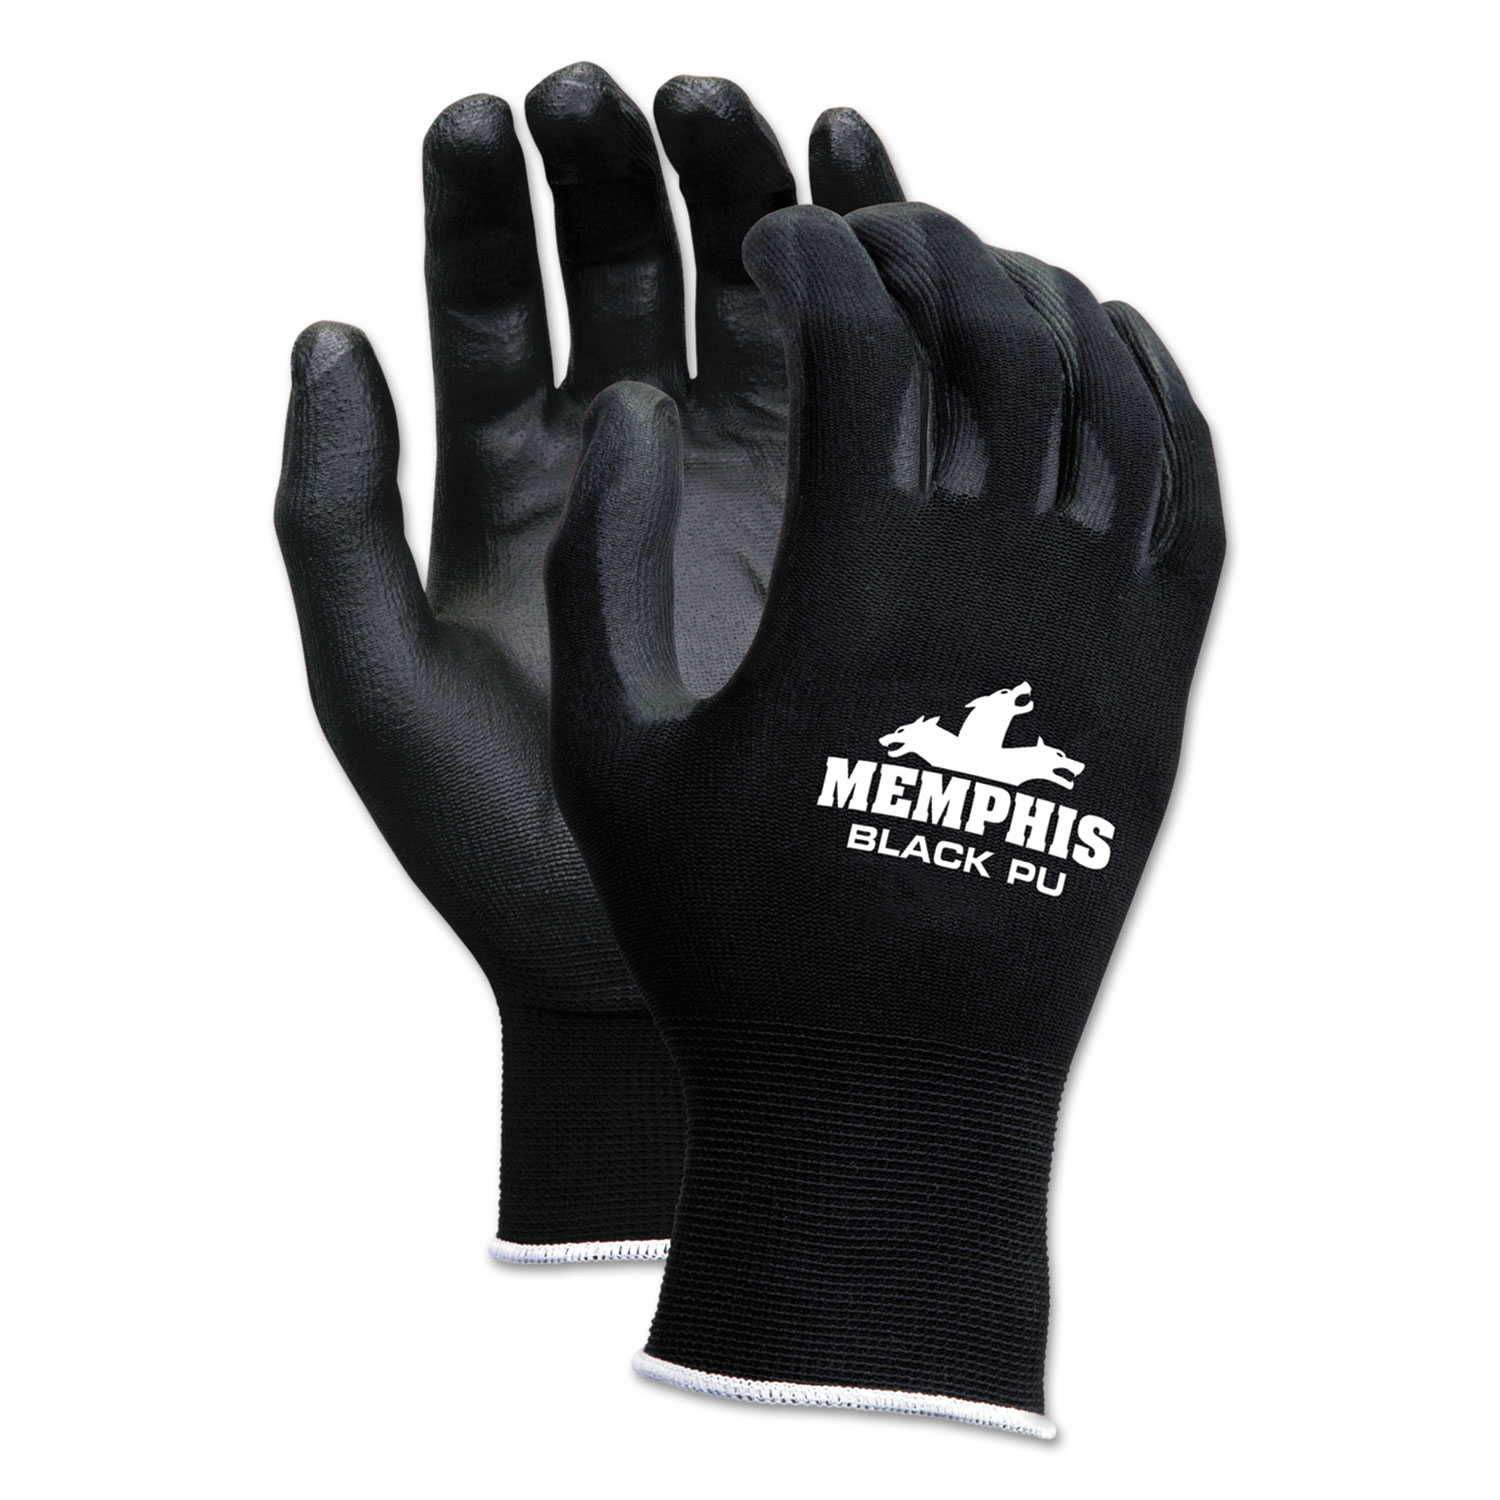  MCR Safety 9669XS Economy PU Coated Work Gloves, Black, X-Small, 1 Dozen (CRW9669XS) 